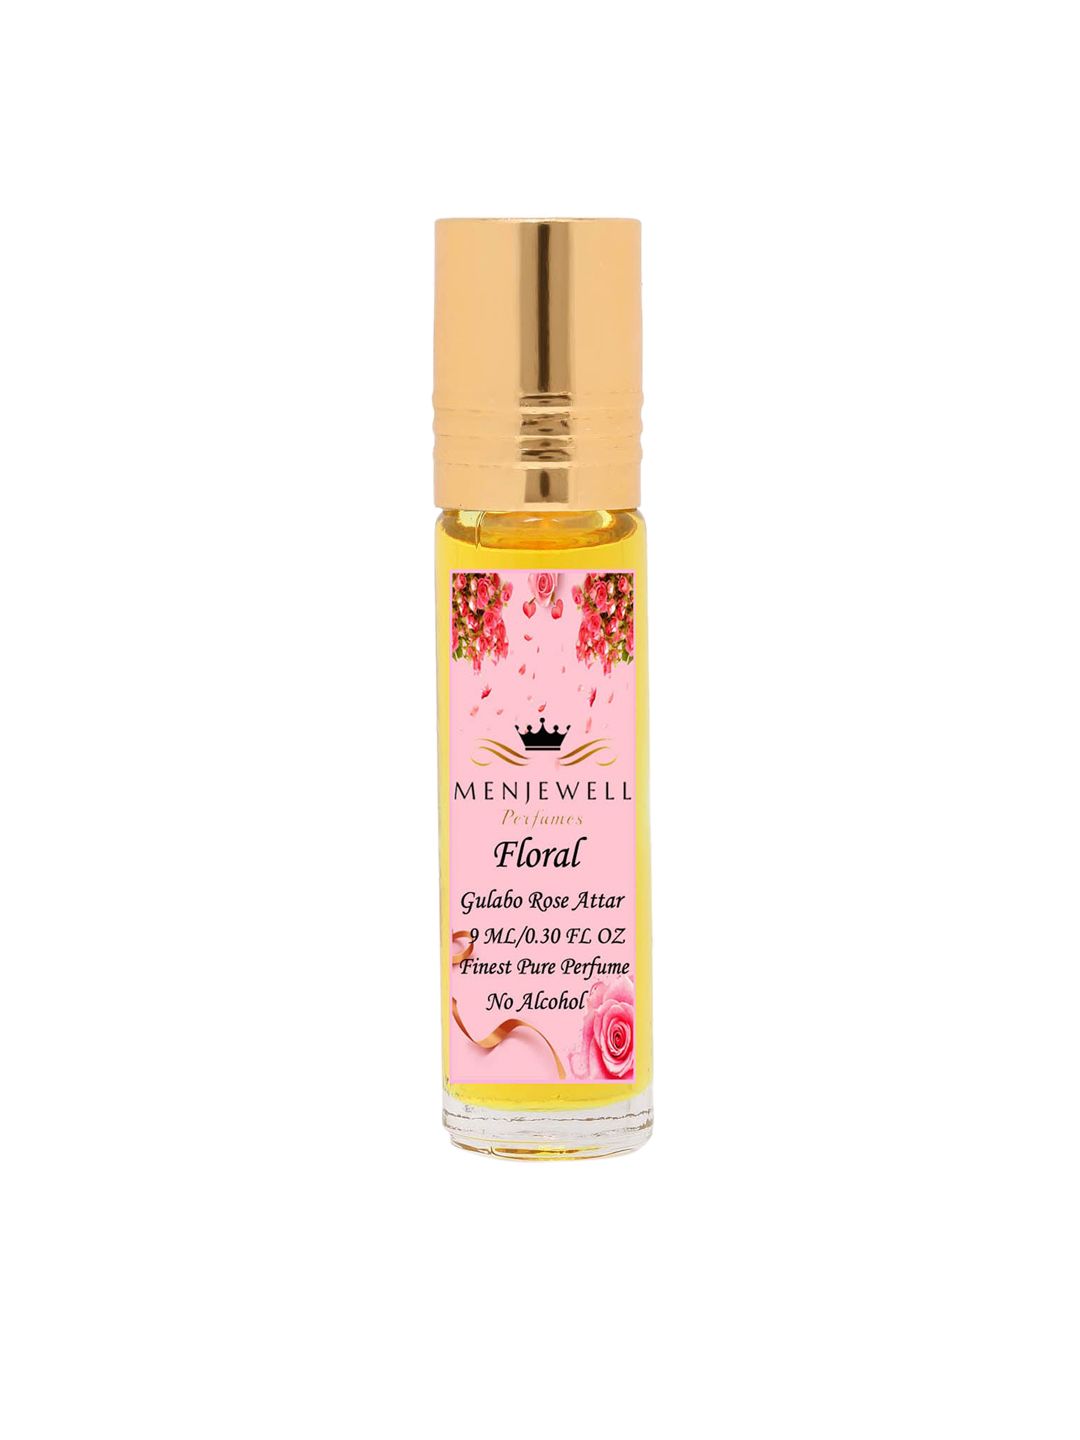 Menjewell Floral Gulabo Rose Long Lasting Attar Perfume - 9 ml Price in India